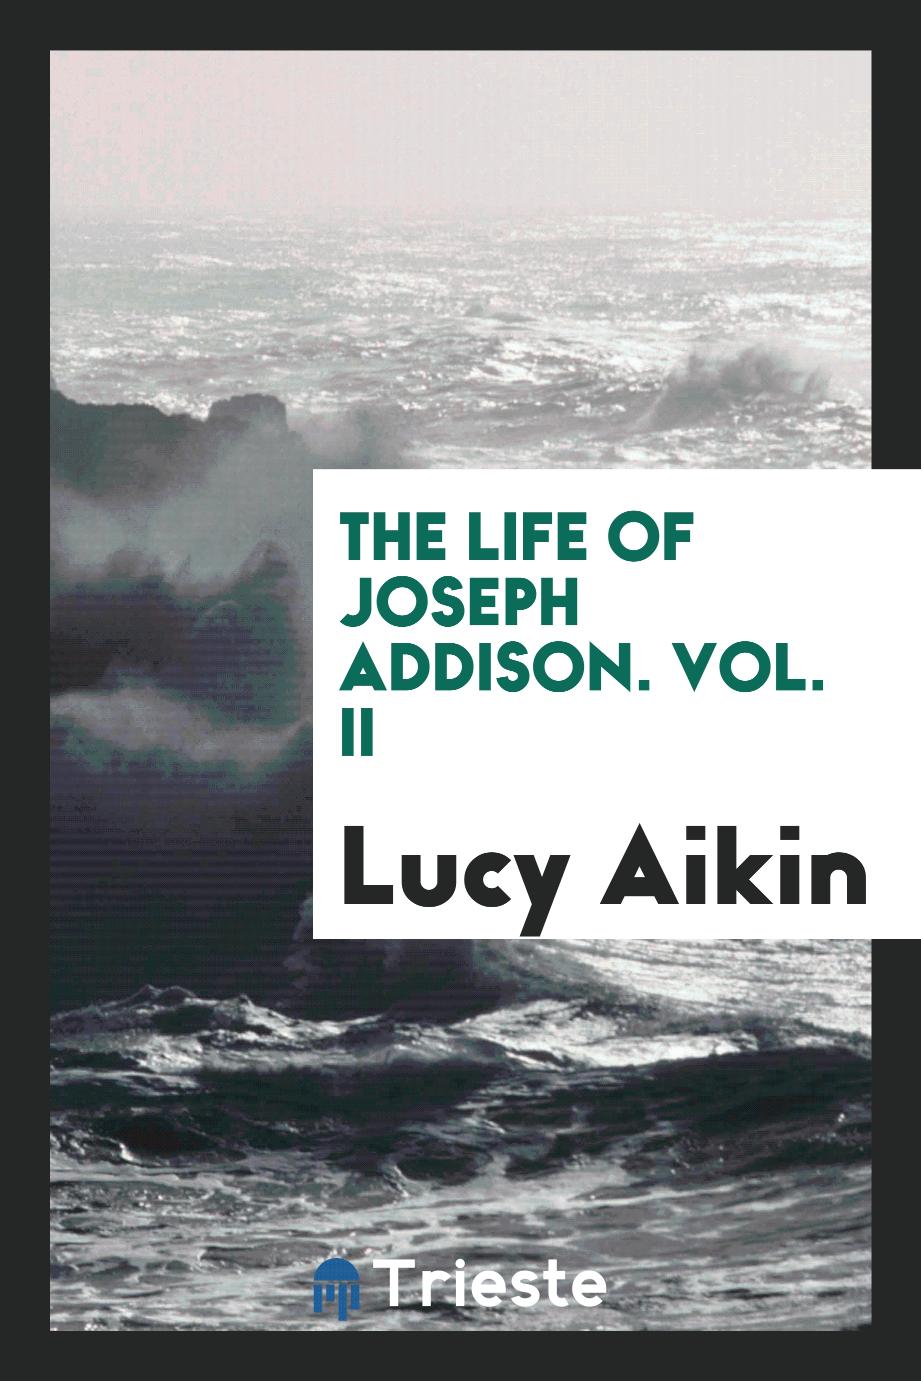 Lucy Aikin - The life of Joseph Addison. Vol. II